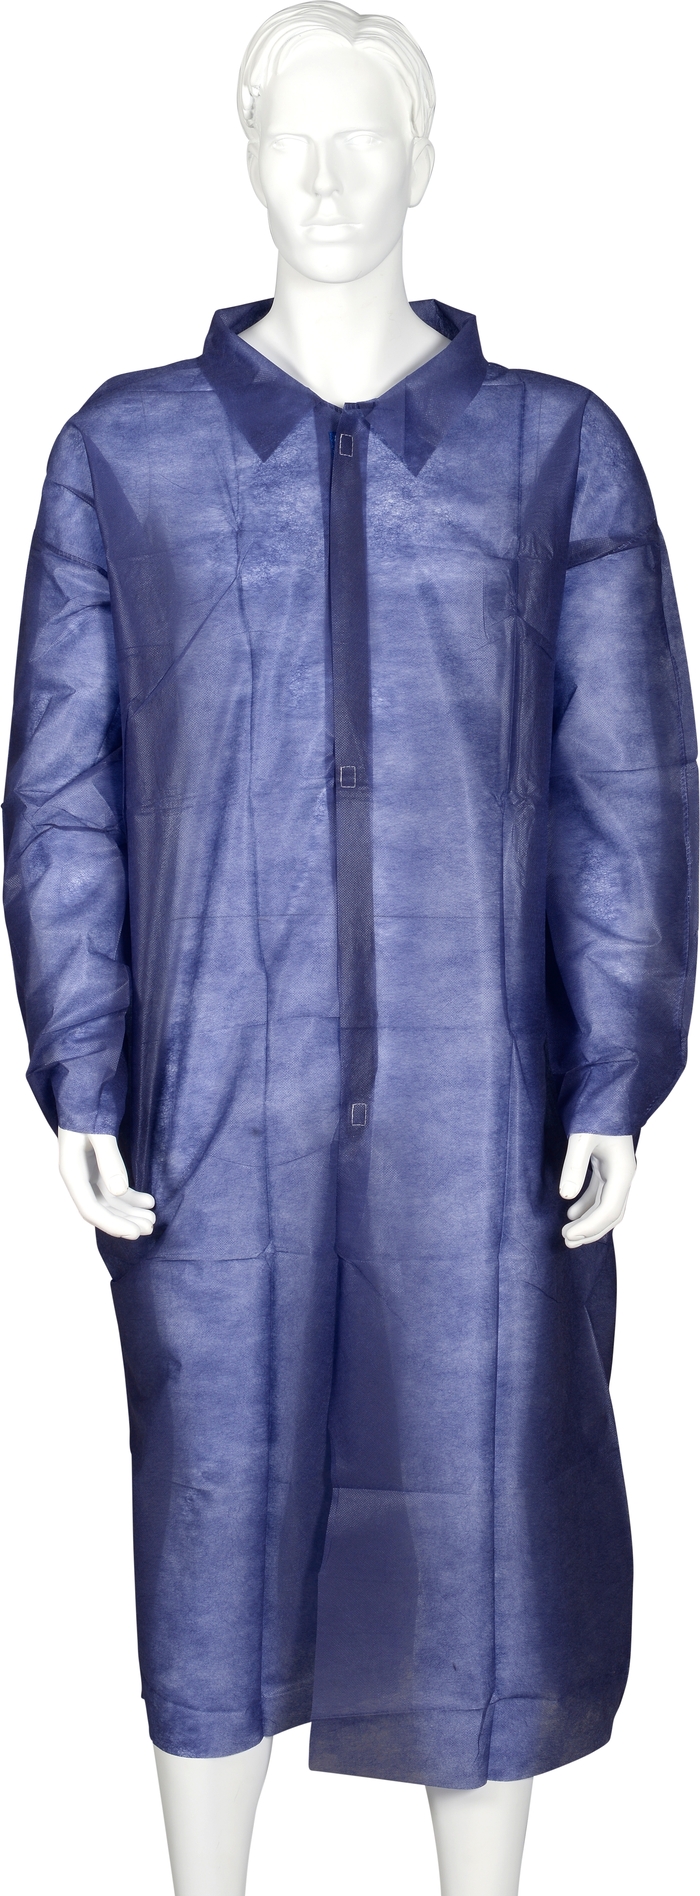 Abena халаты PP XXL/3XL на липучках, темно синие,  5 шт.